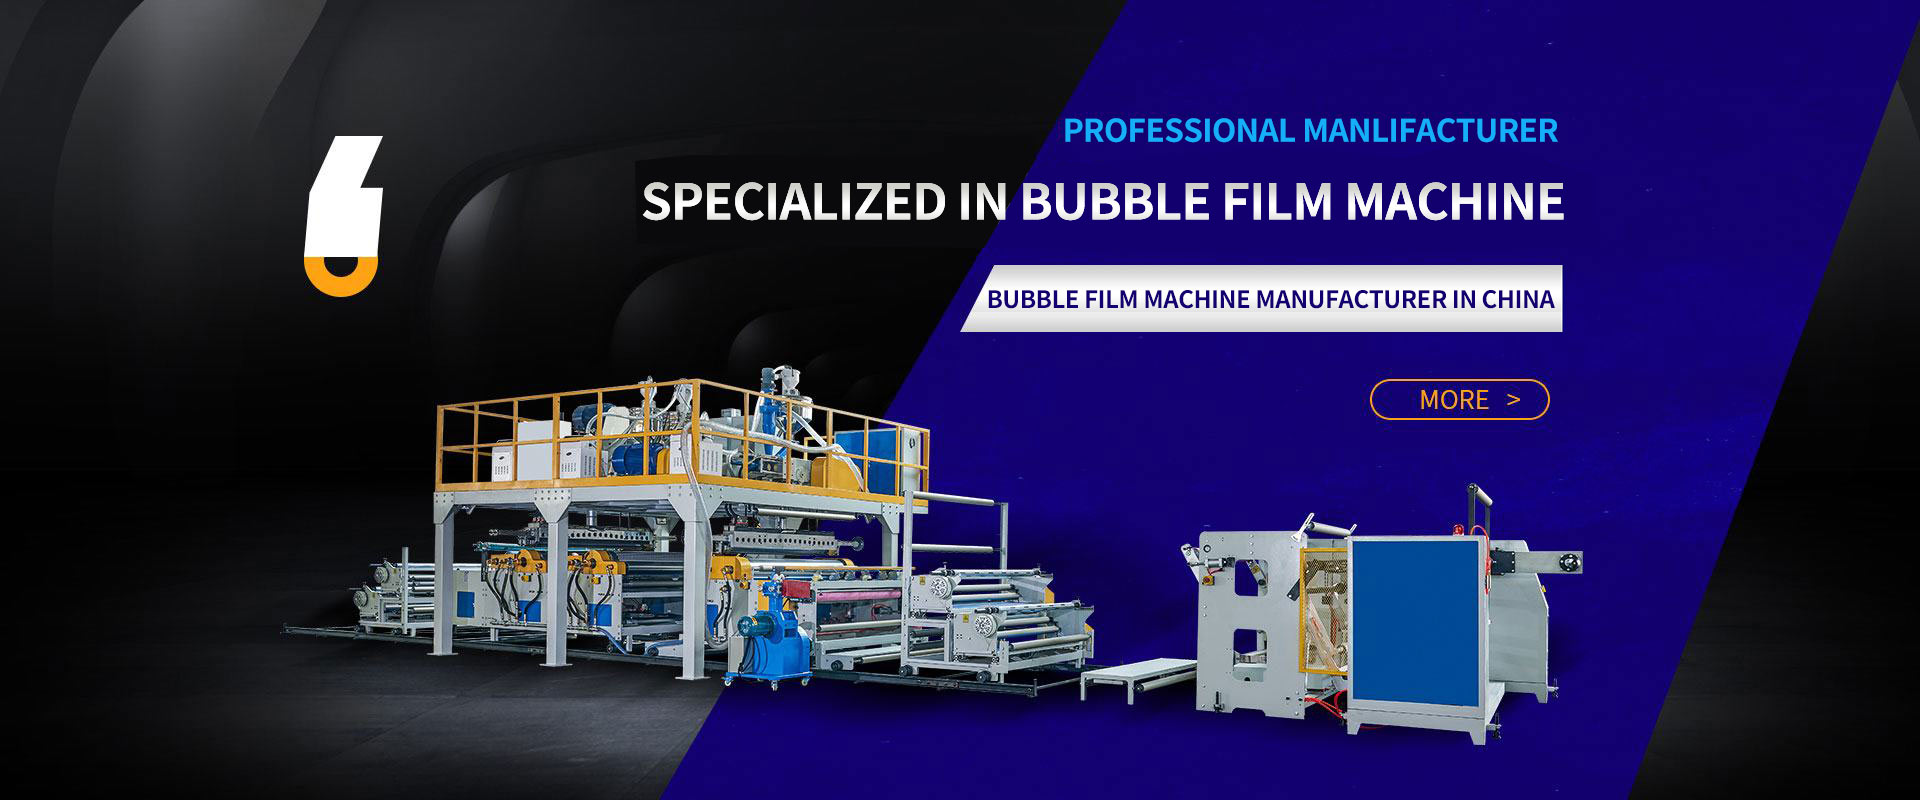 China bubble film equipment manufacturer